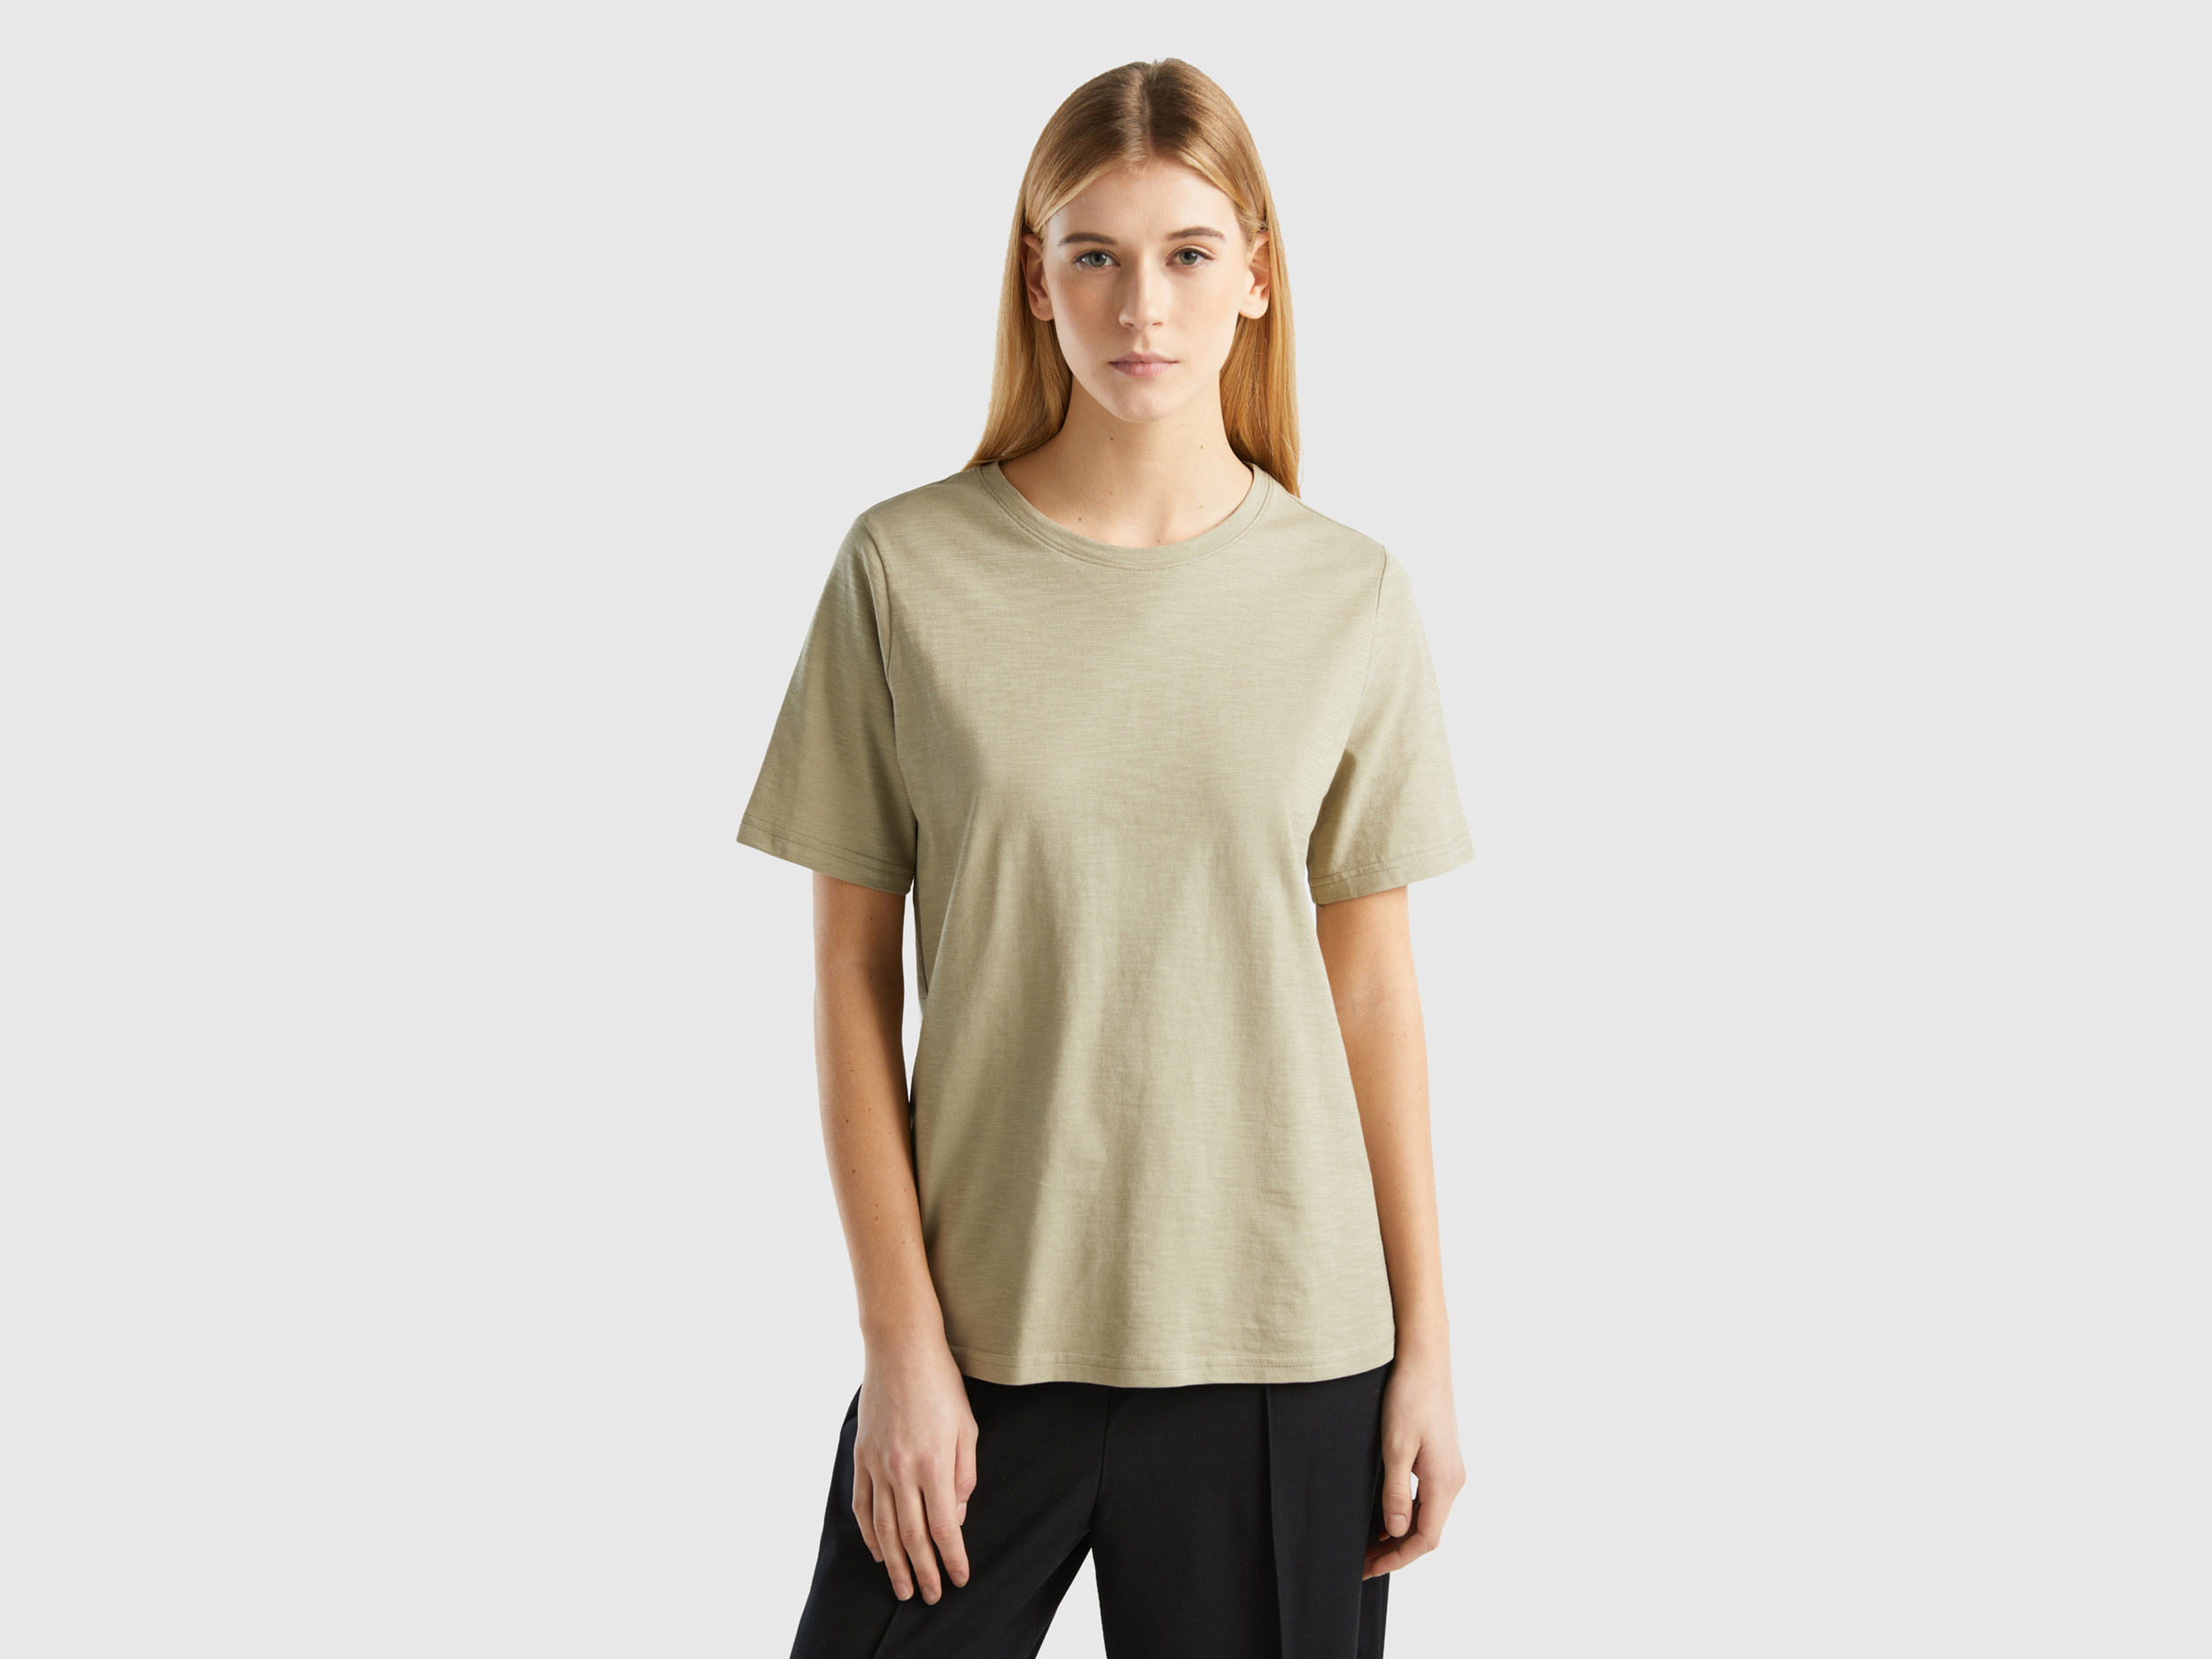 Benetton, Crew Neck T-shirt In Slub Cotton, size XXS, Light Green, Women